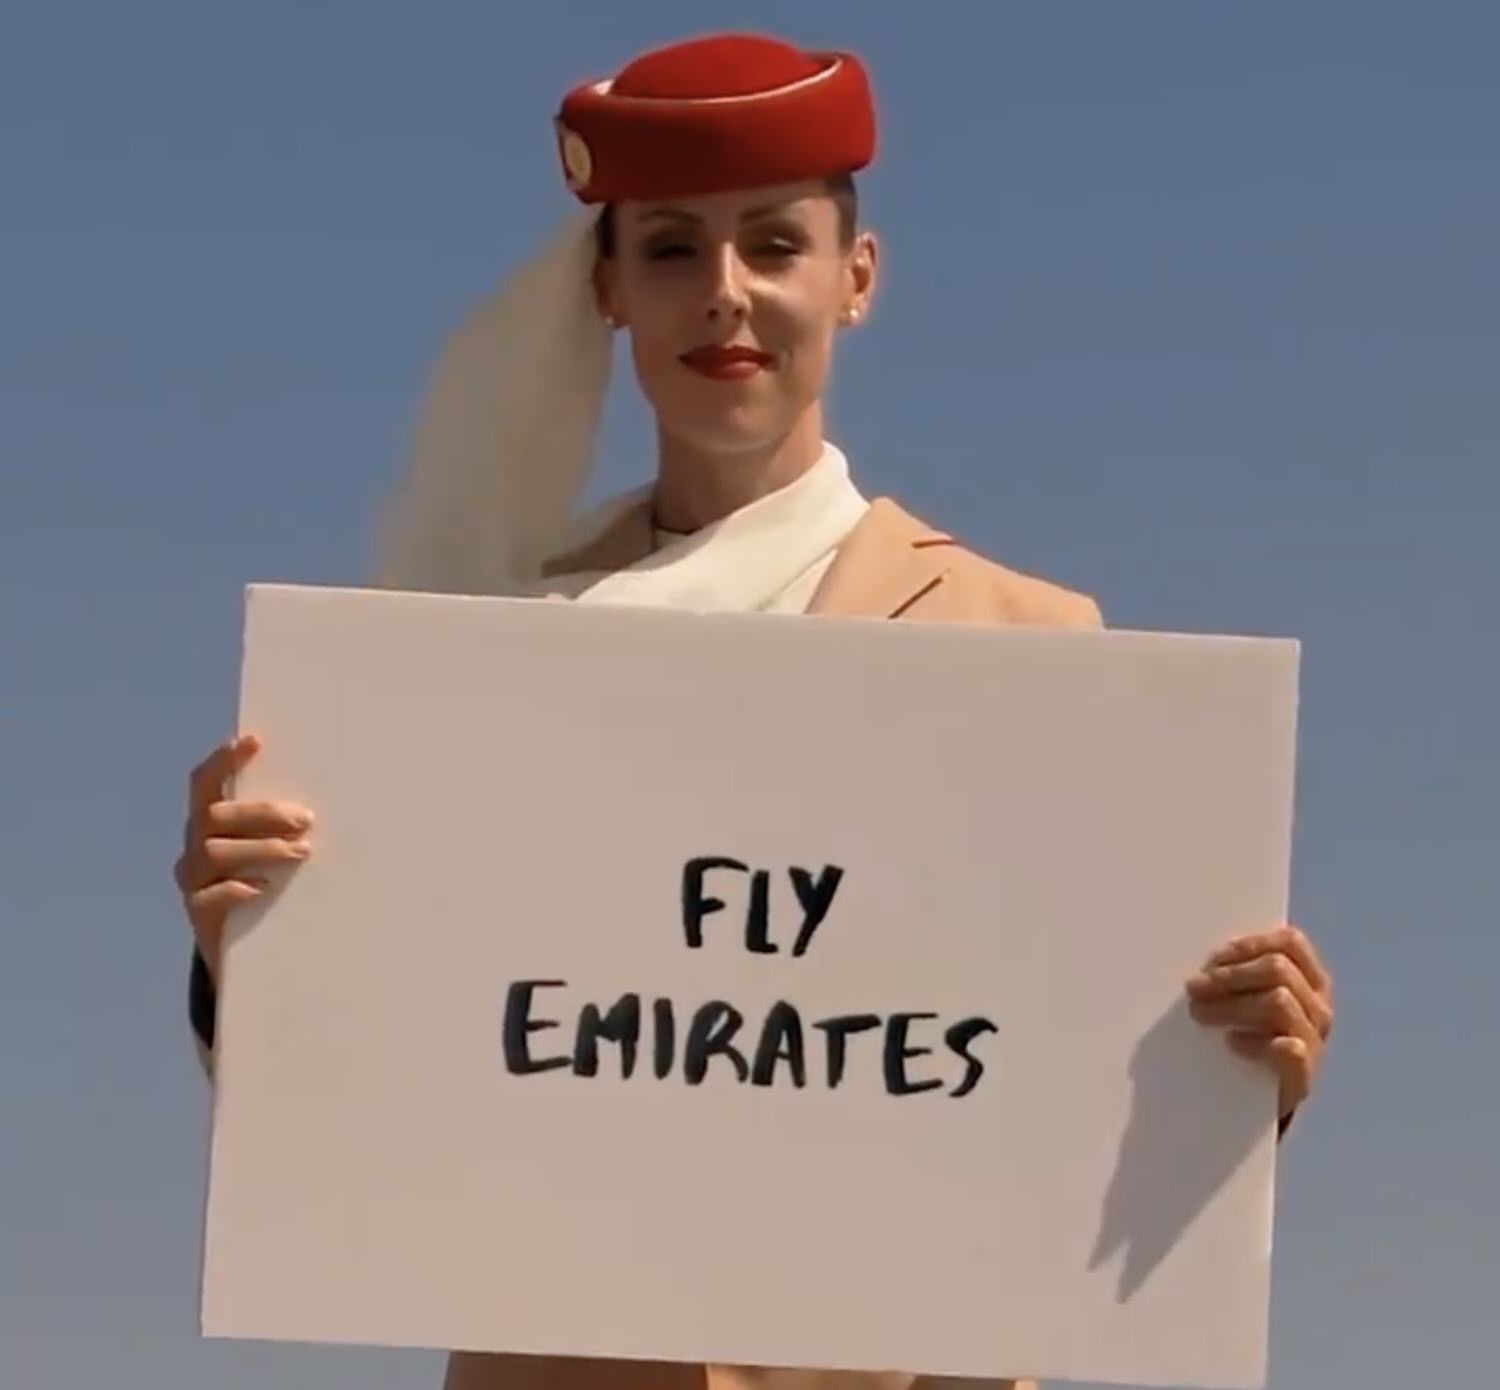 Fly emirates cm